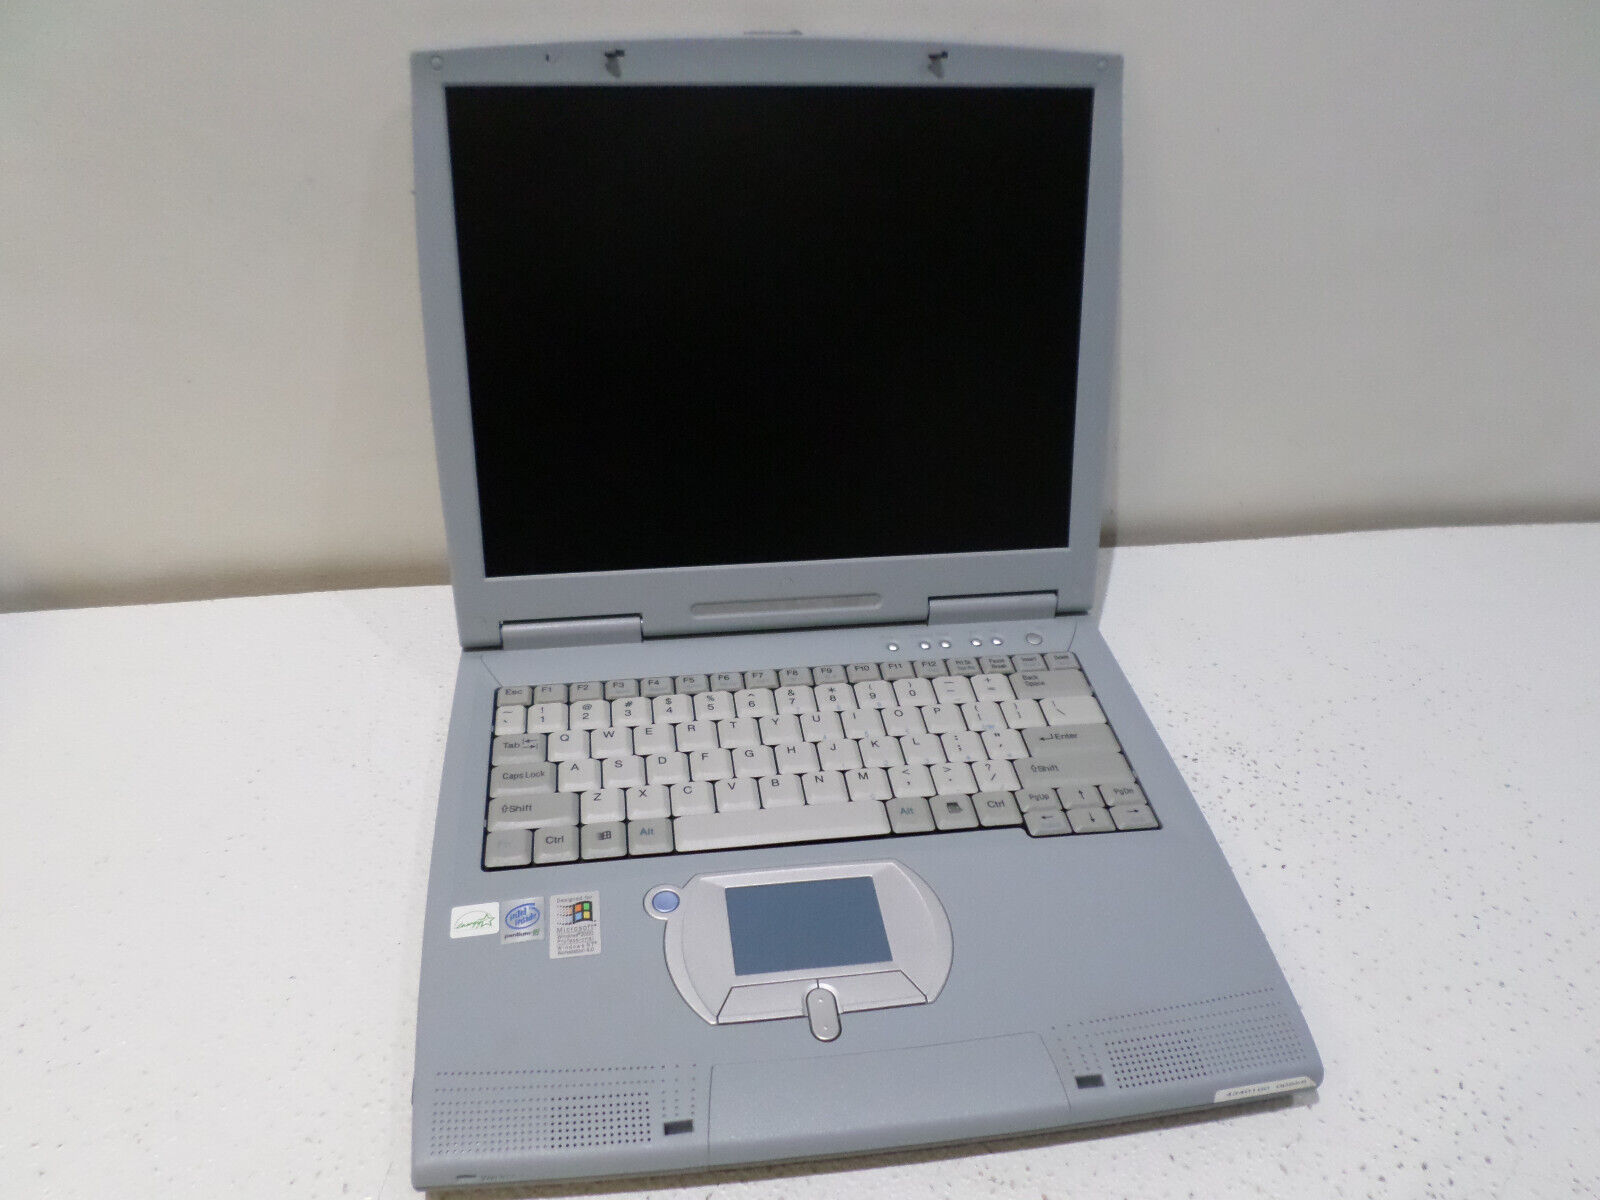 VINTAGE Hitachi FLORA 270HX Laptop - Intel Pentium 3, 256MB RAM, No HDD